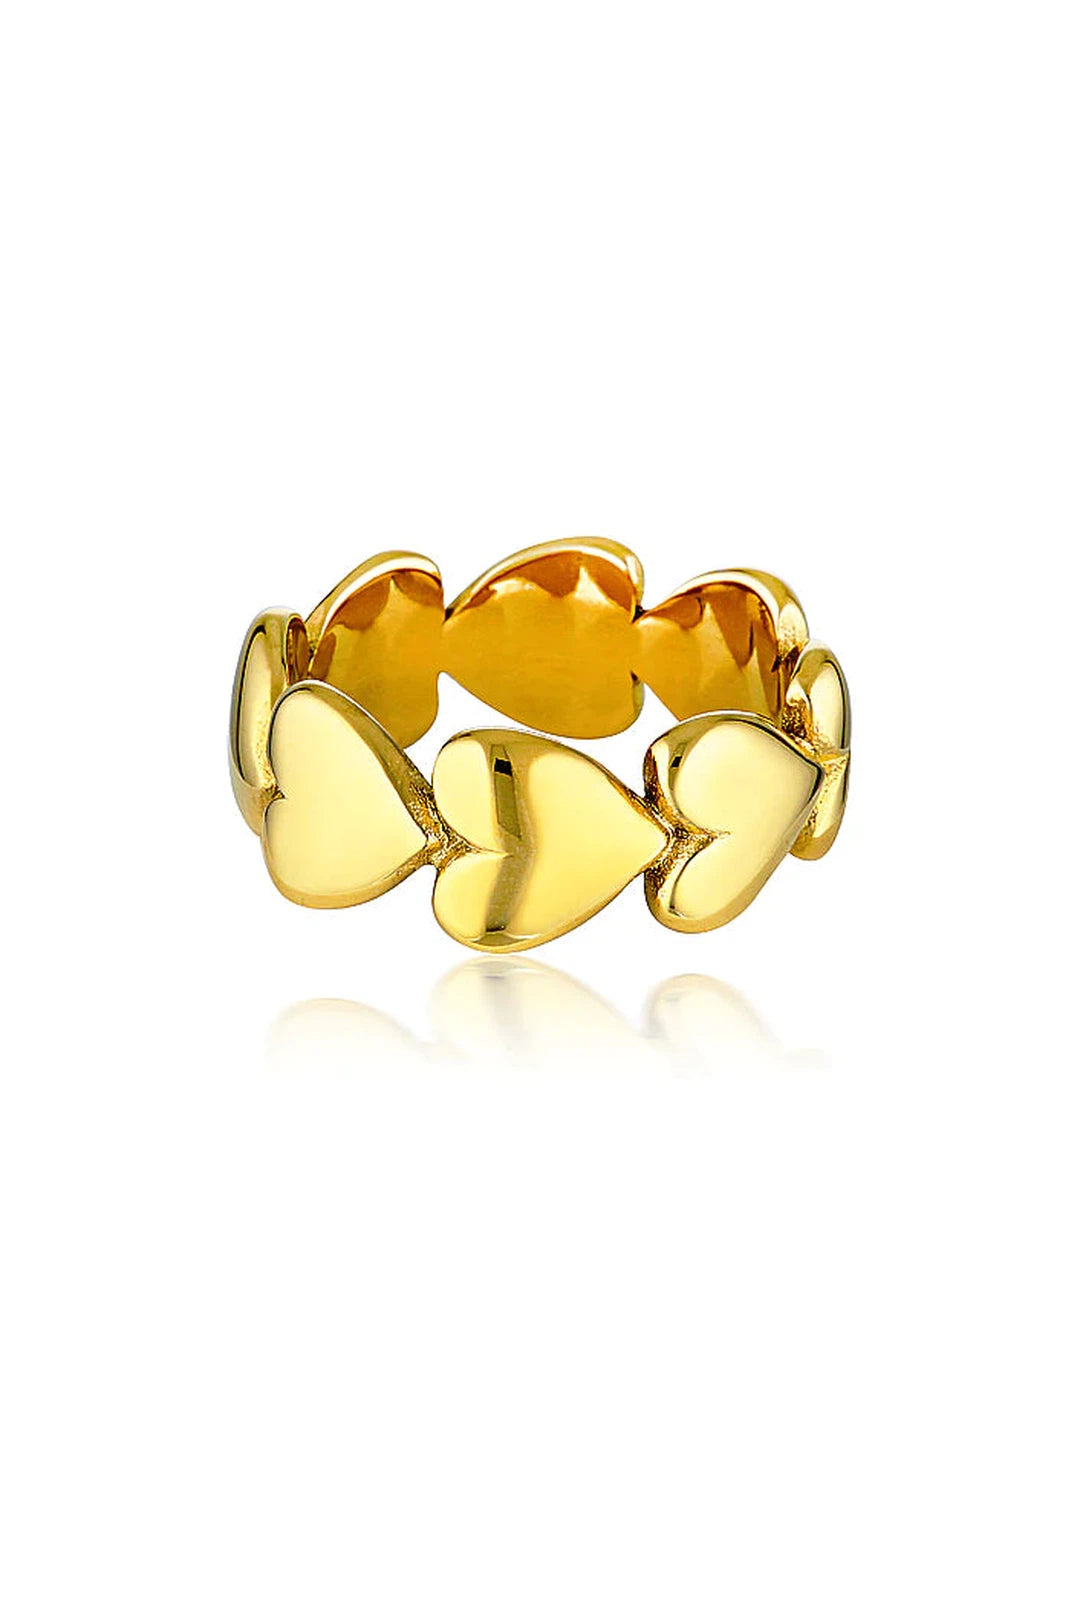 Naya heart ring, gold size 7